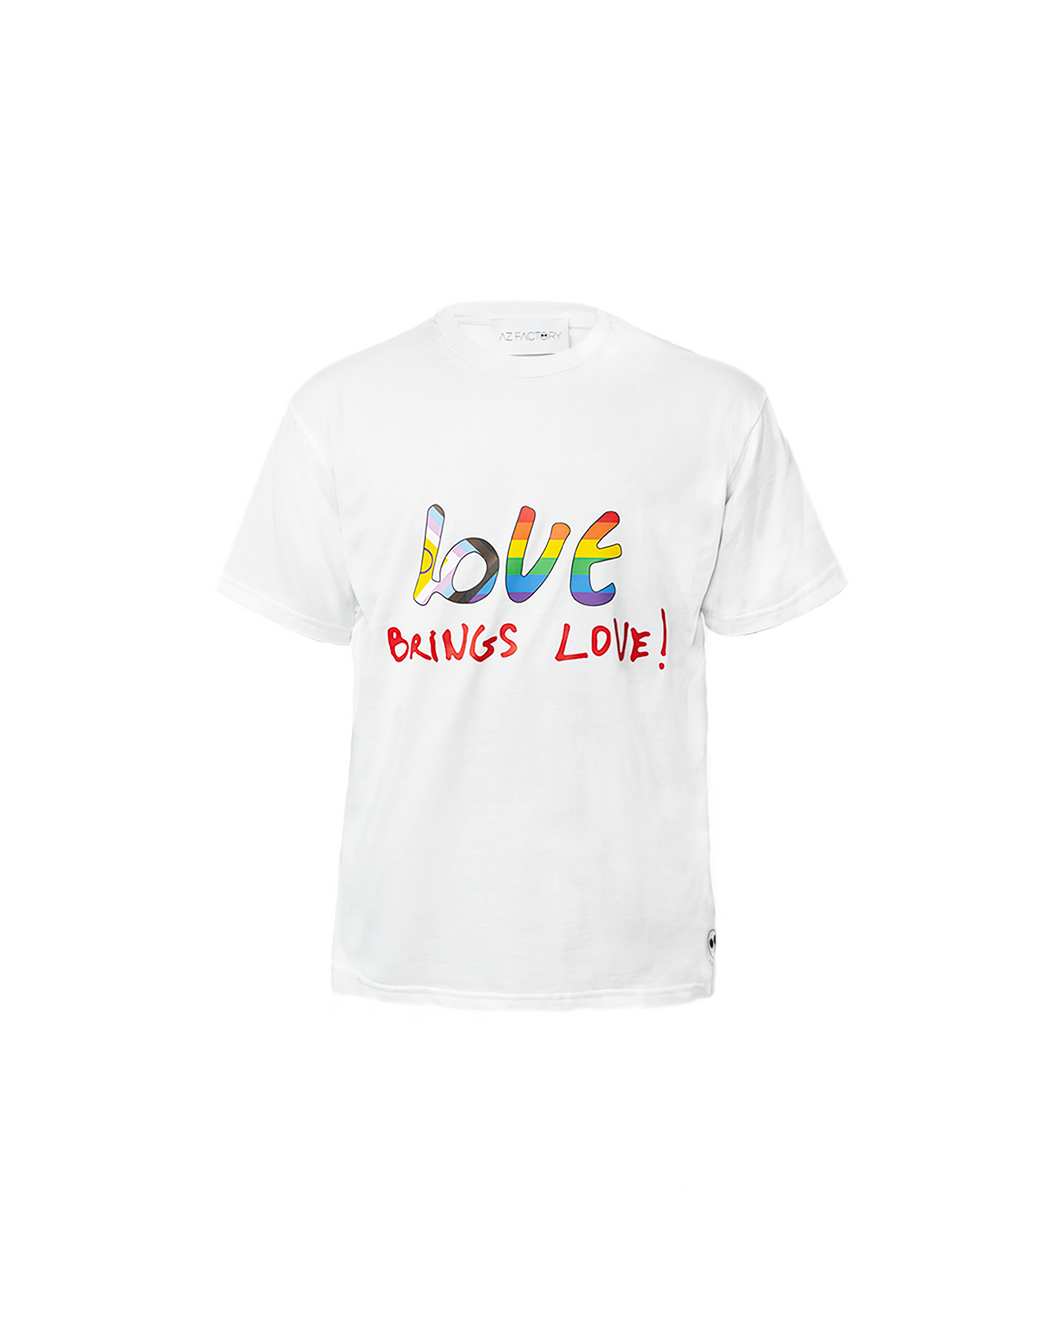 LOVE BRINGS LOVE PRIDE T-SHIRT - MULTICOLOR / WHITE